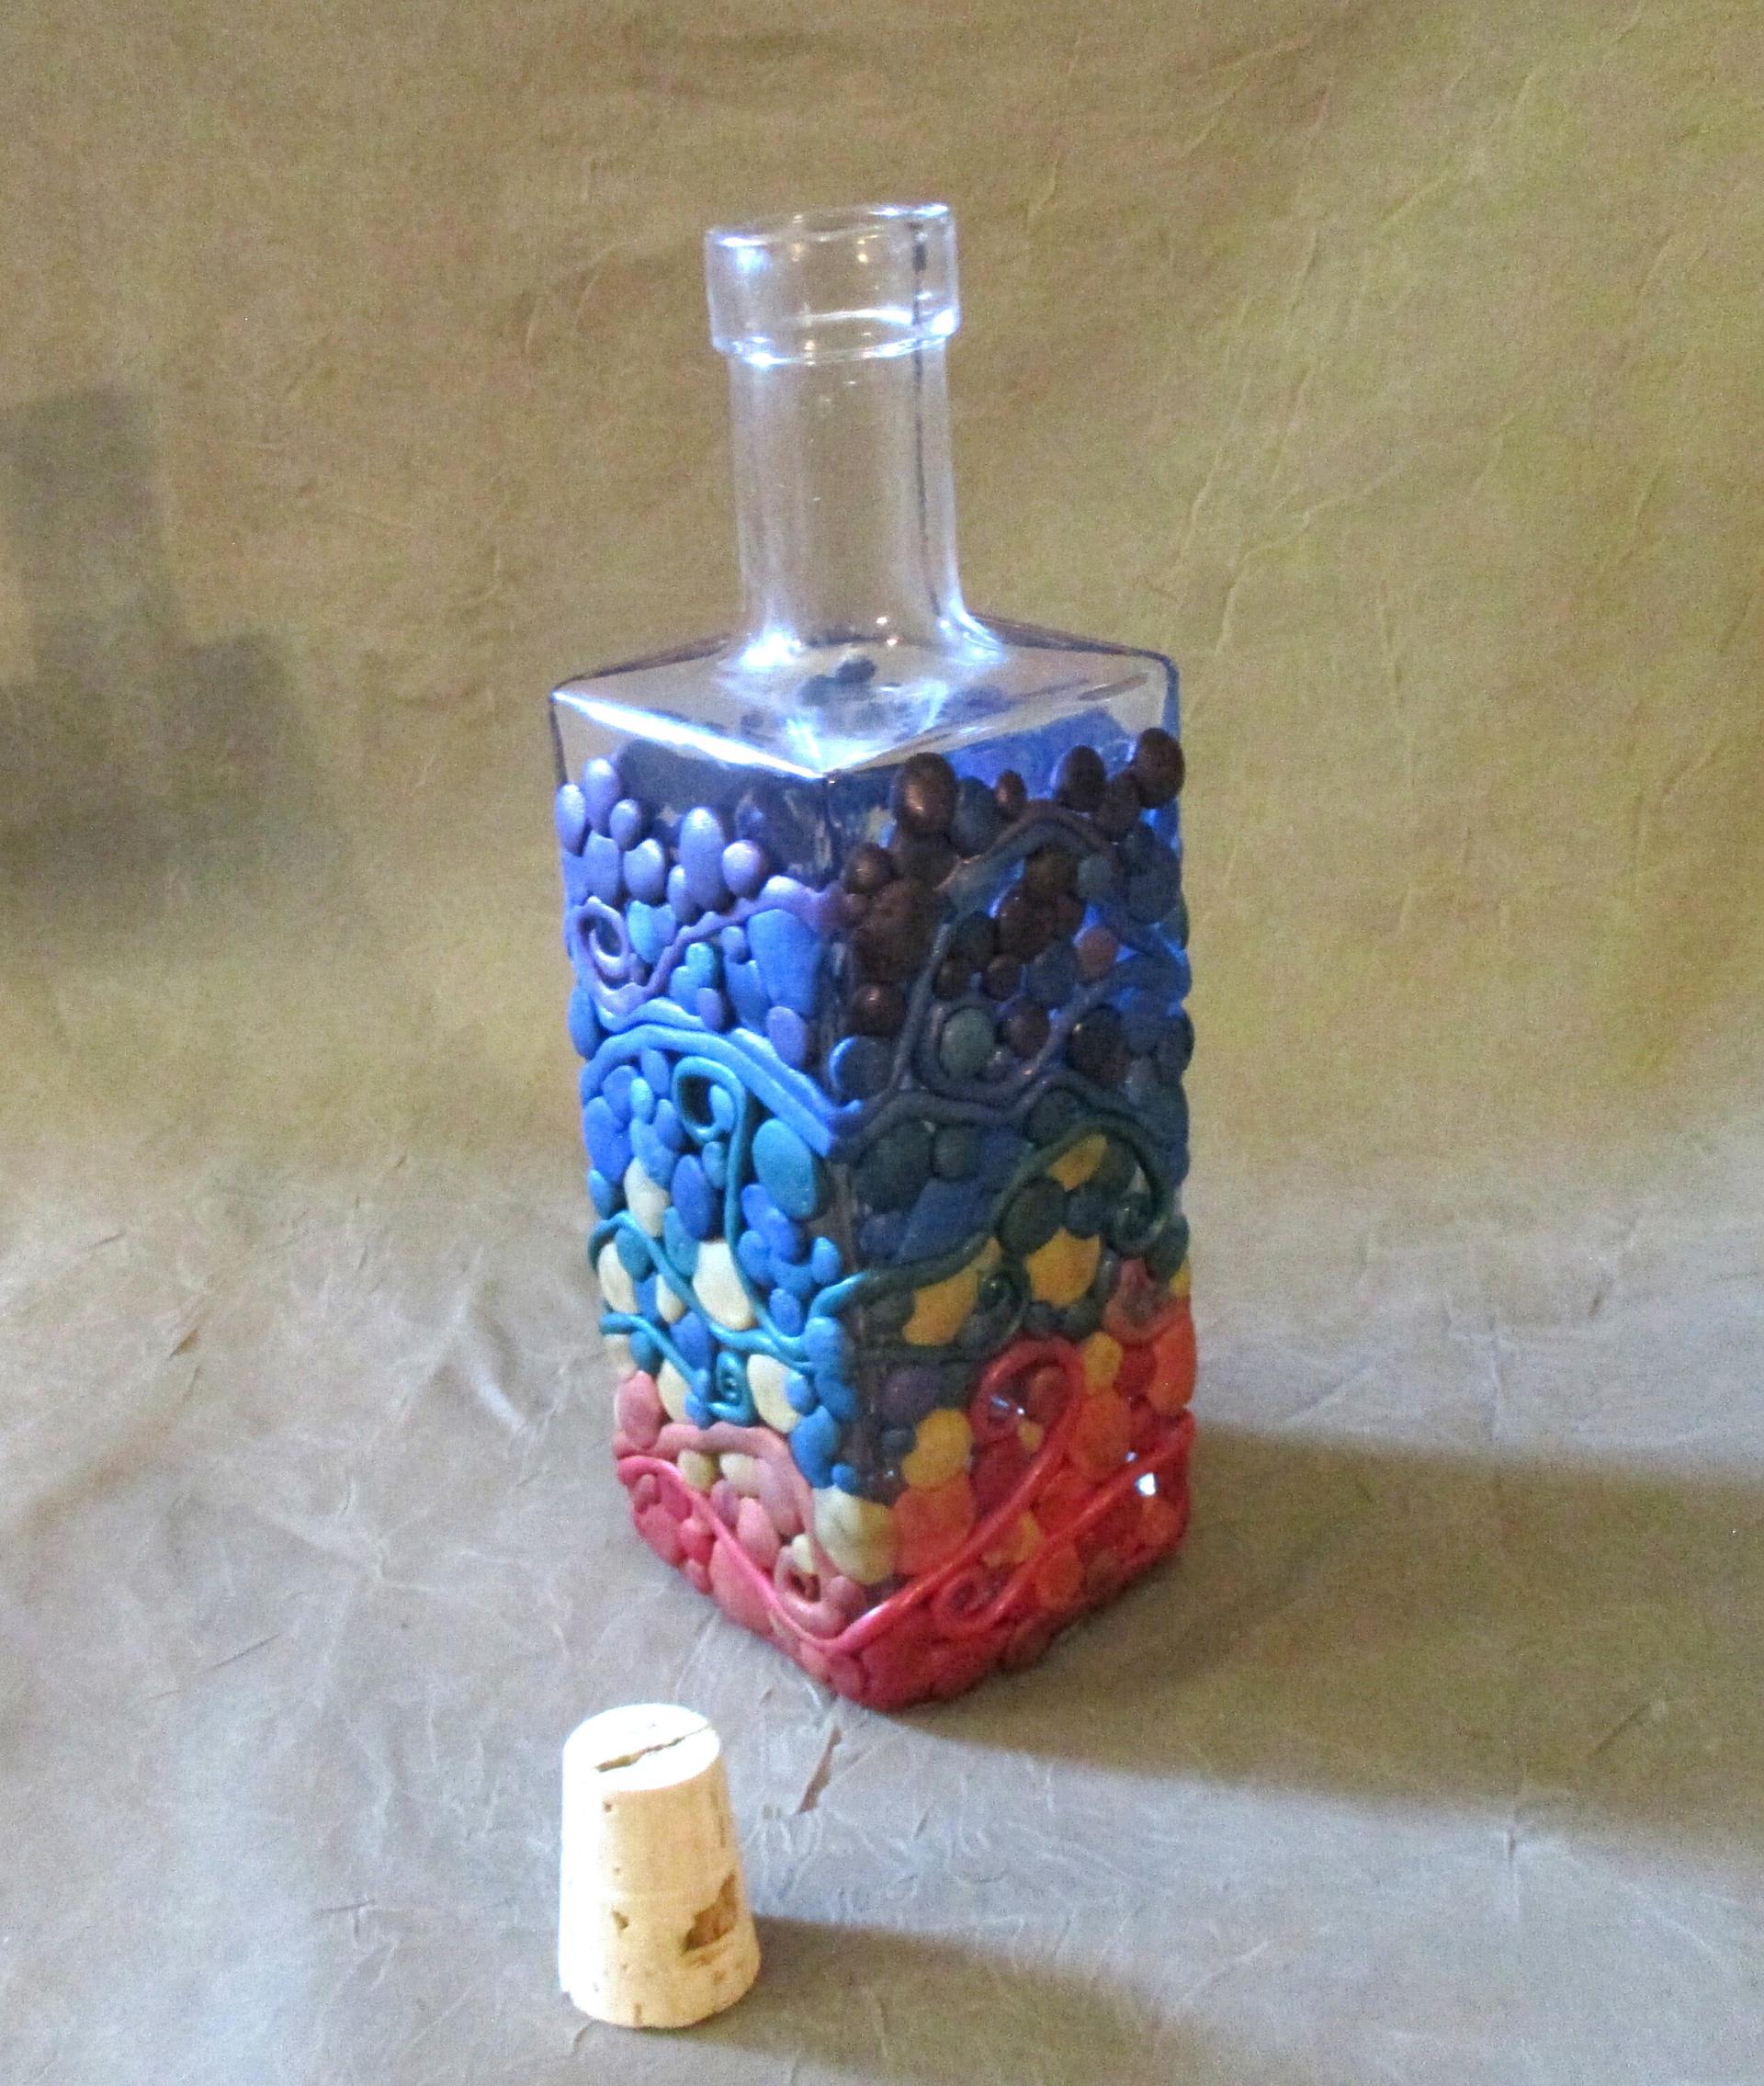 Large Cork Bottle, Decorative Bottle - 8oz - Glass Bottle with Polymer Clay